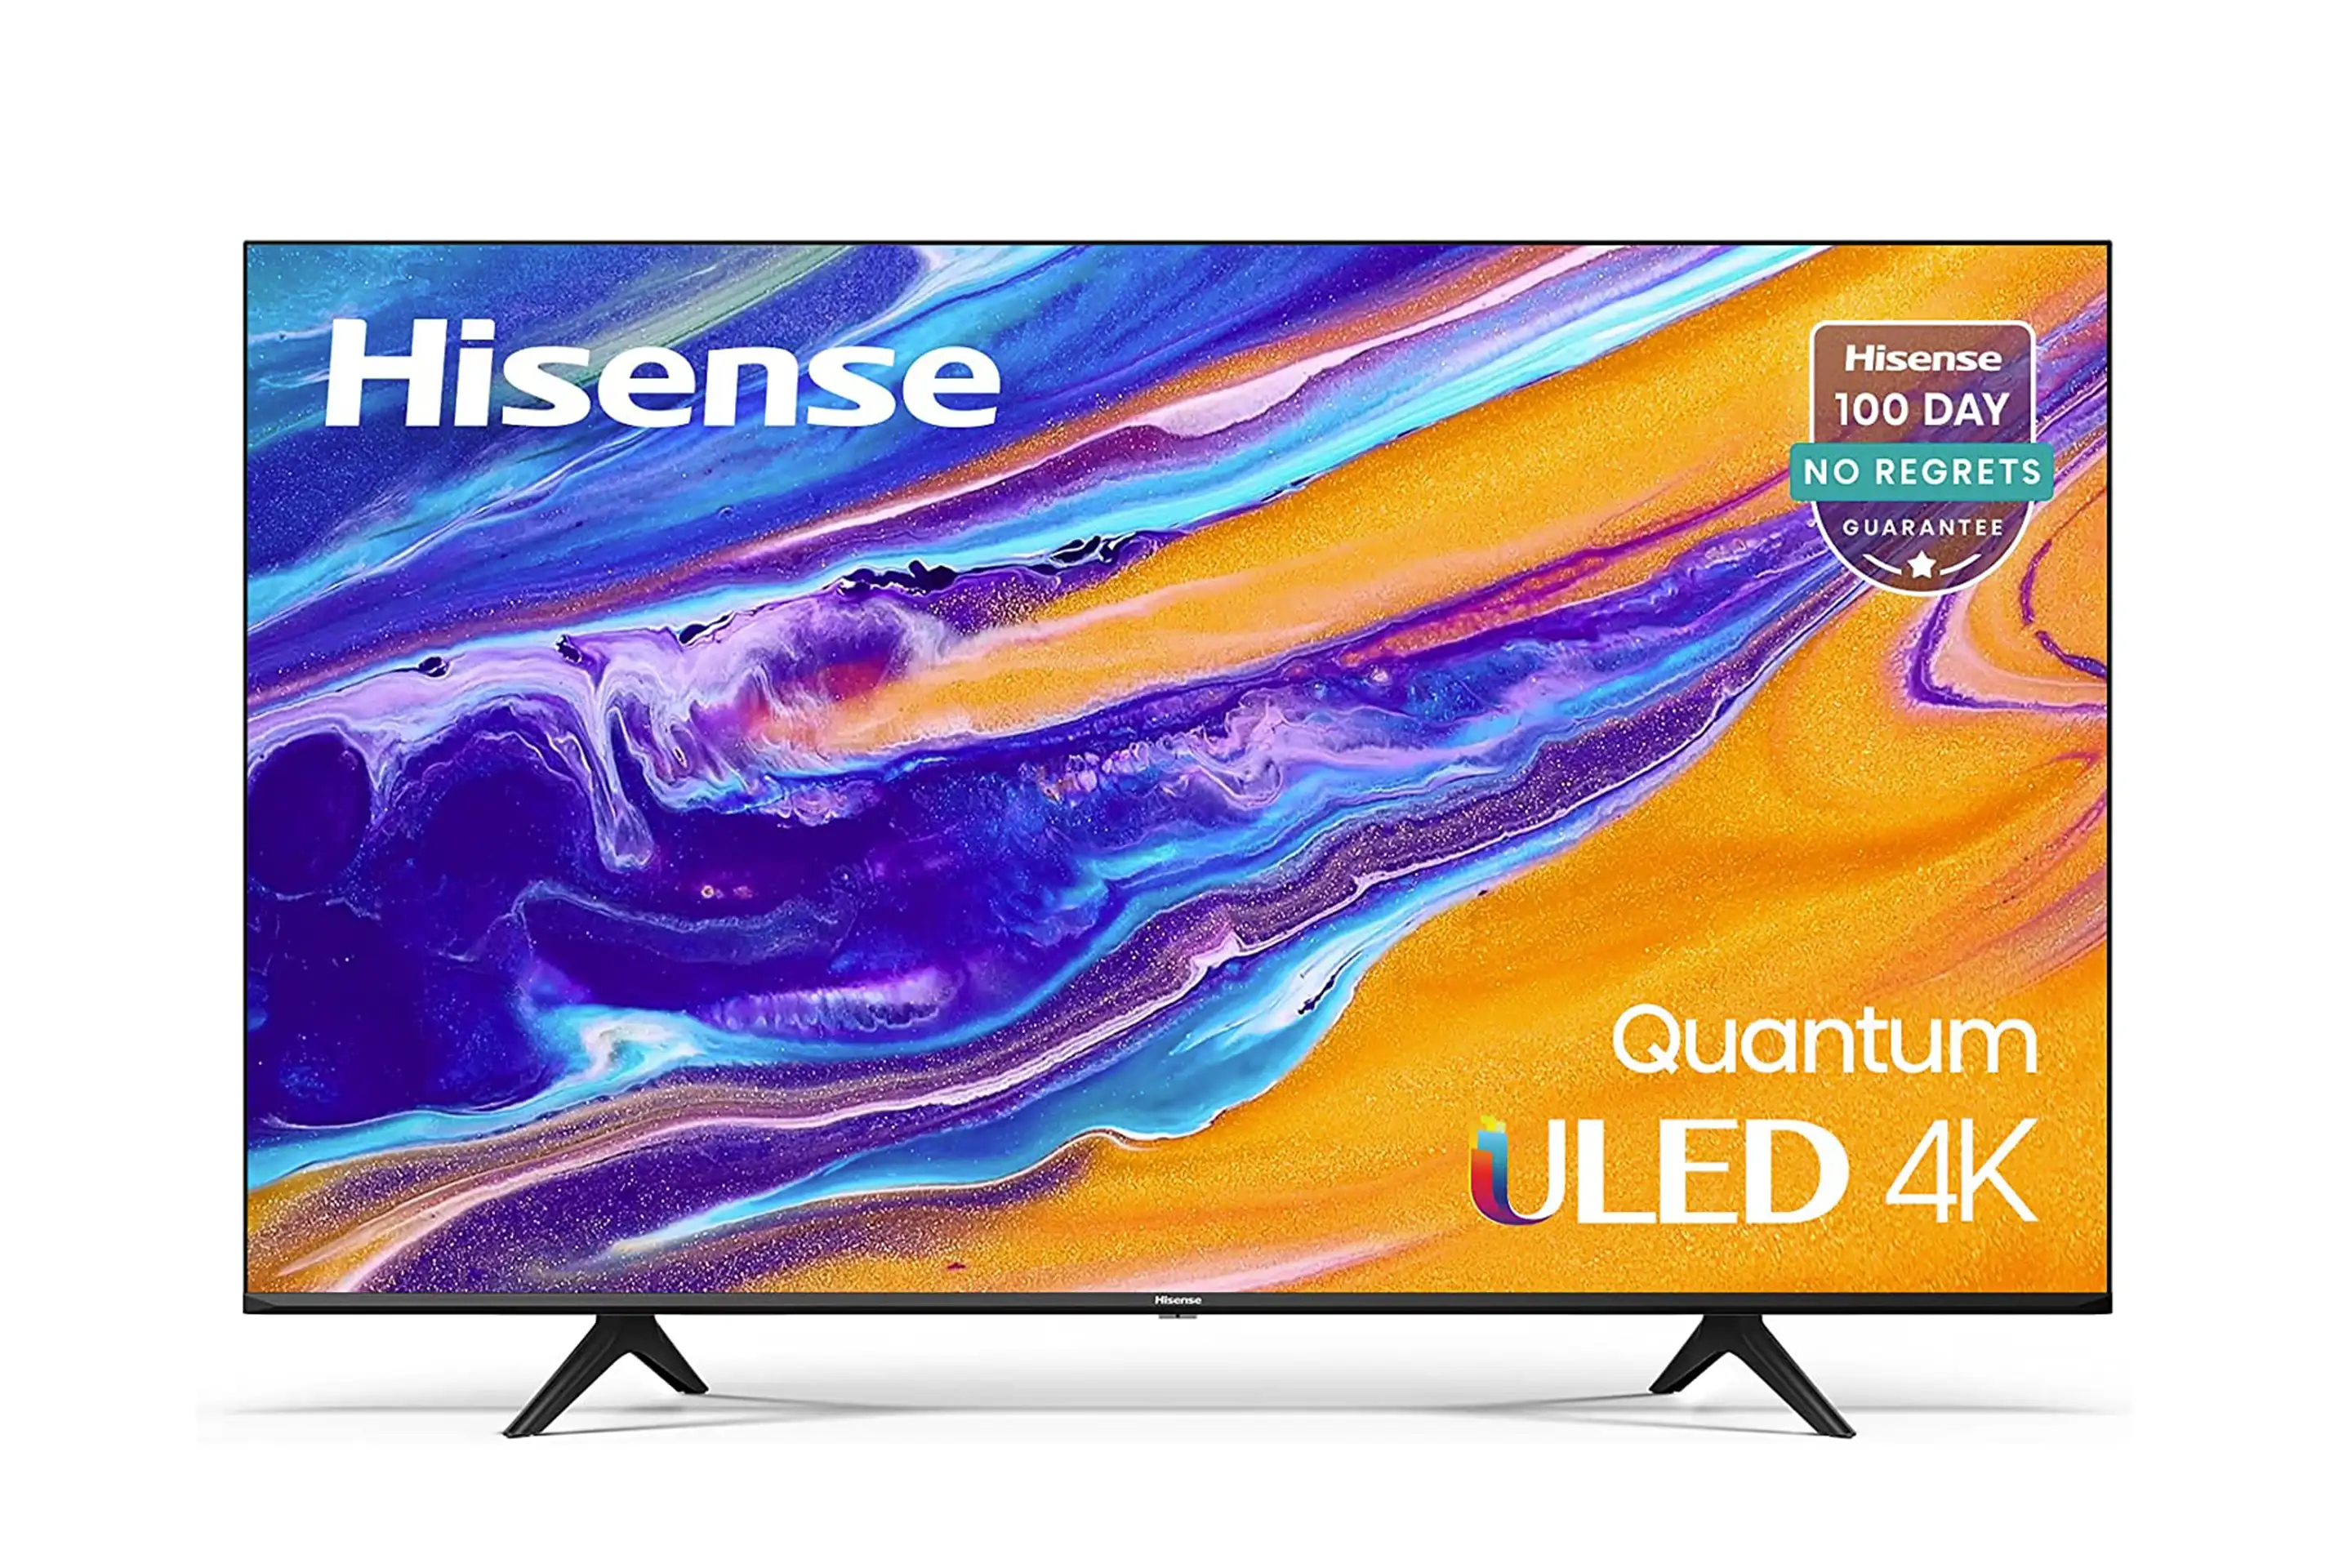 Hisense ULED 4K-Premium 55U6G 55-Inch Smart TV